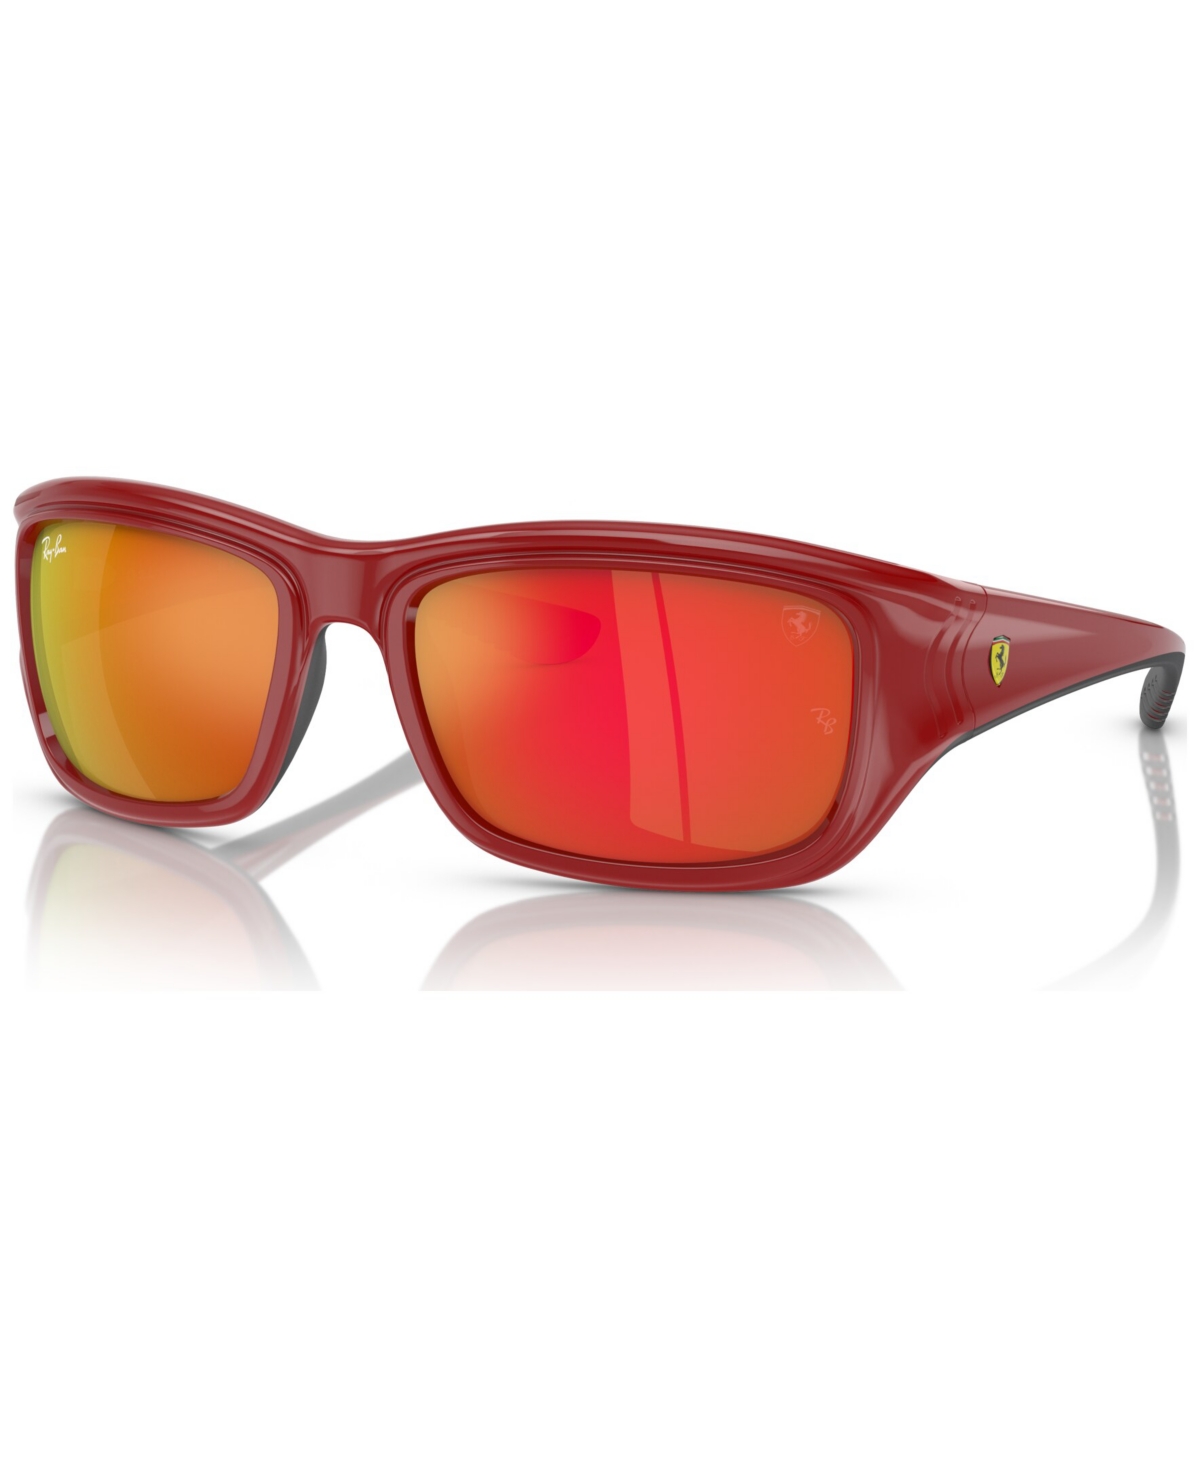 Ray Ban Sunglasses Male Rb4405m Scuderia Ferrari Collection - Red On Black Frame Orange Lenses 59-19